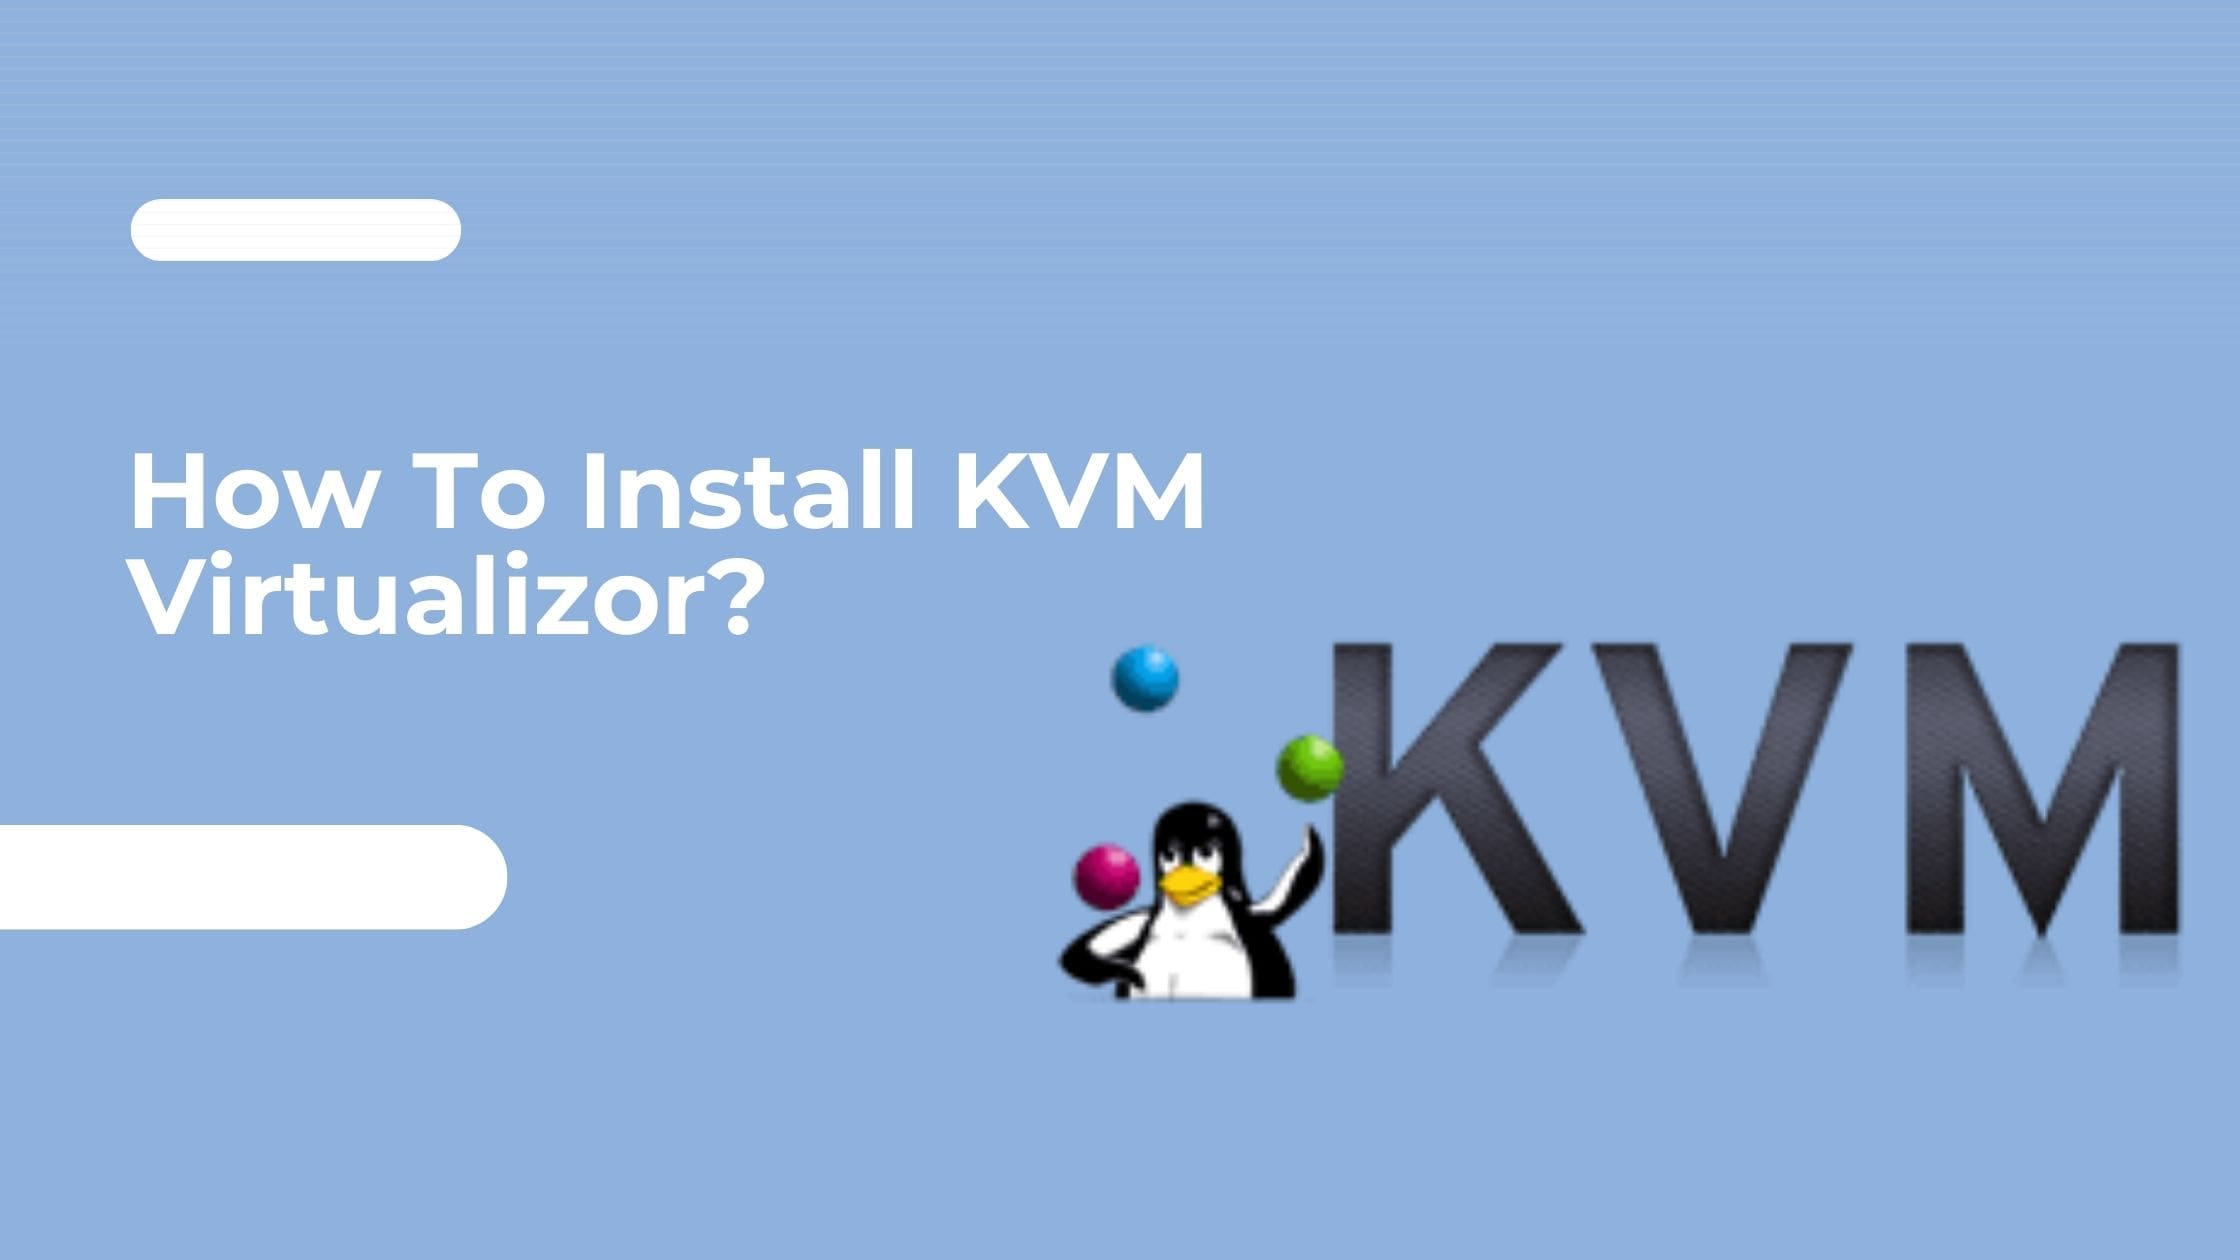  How To Install KVM Virtualizor